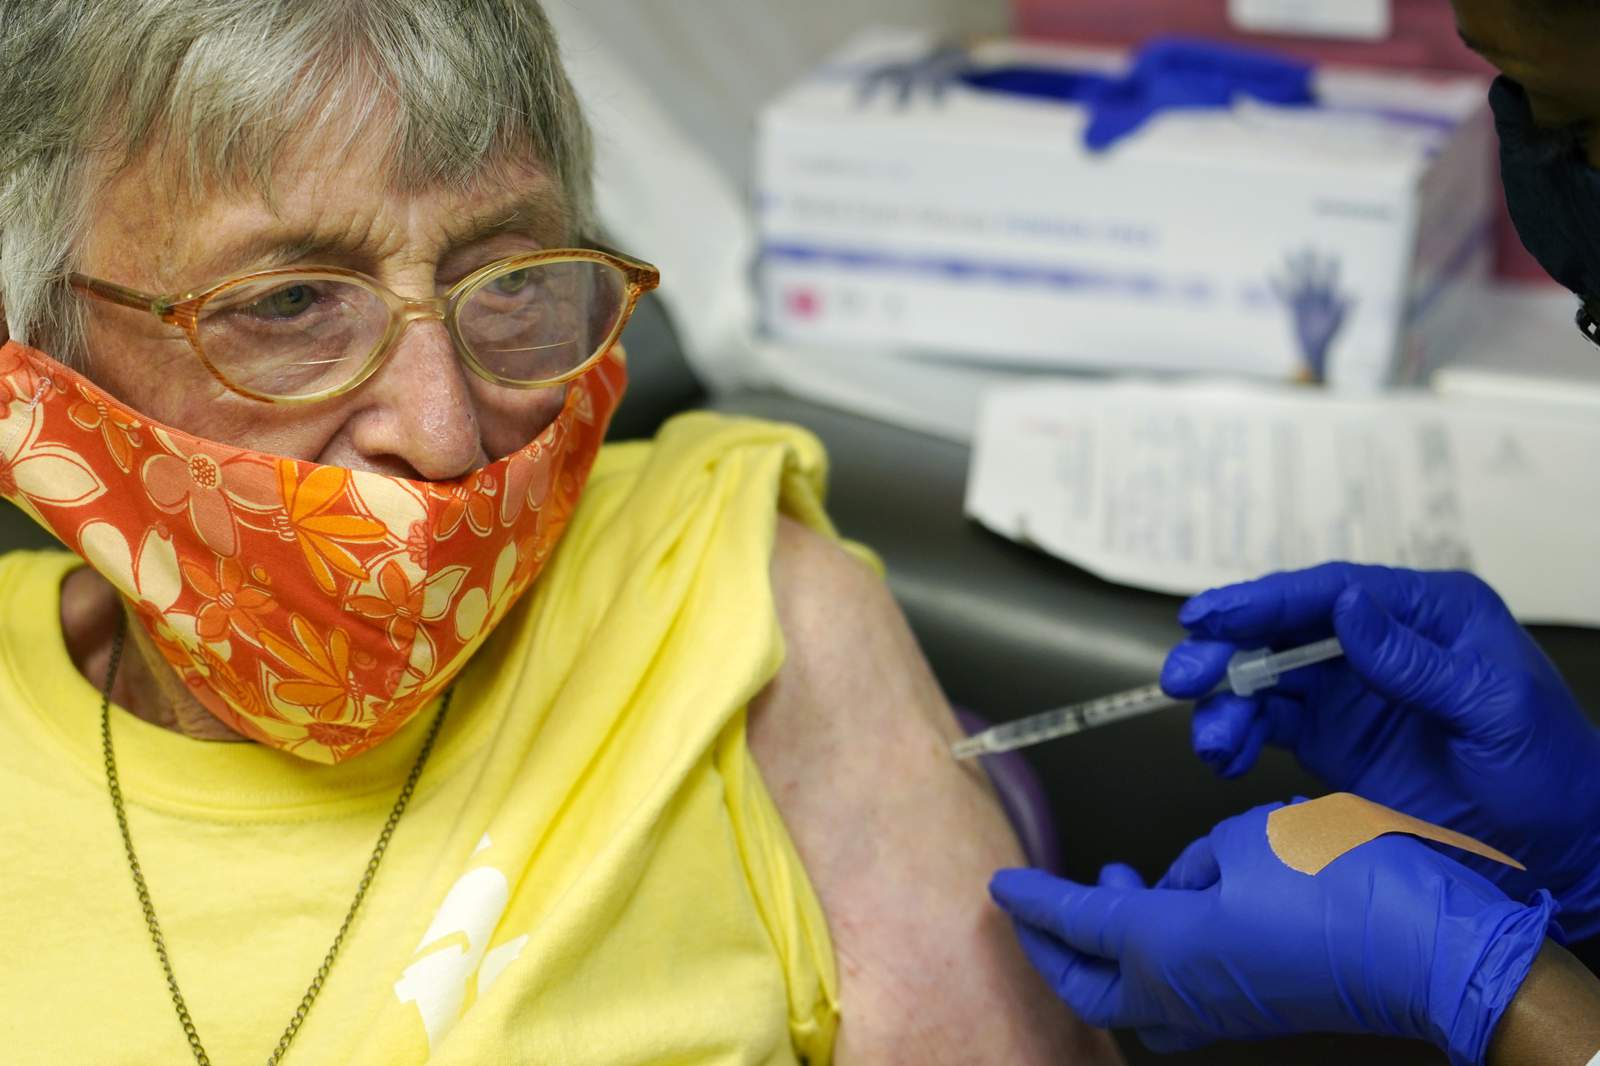 Summoning seniors: Big new push to vaccinate older Americans